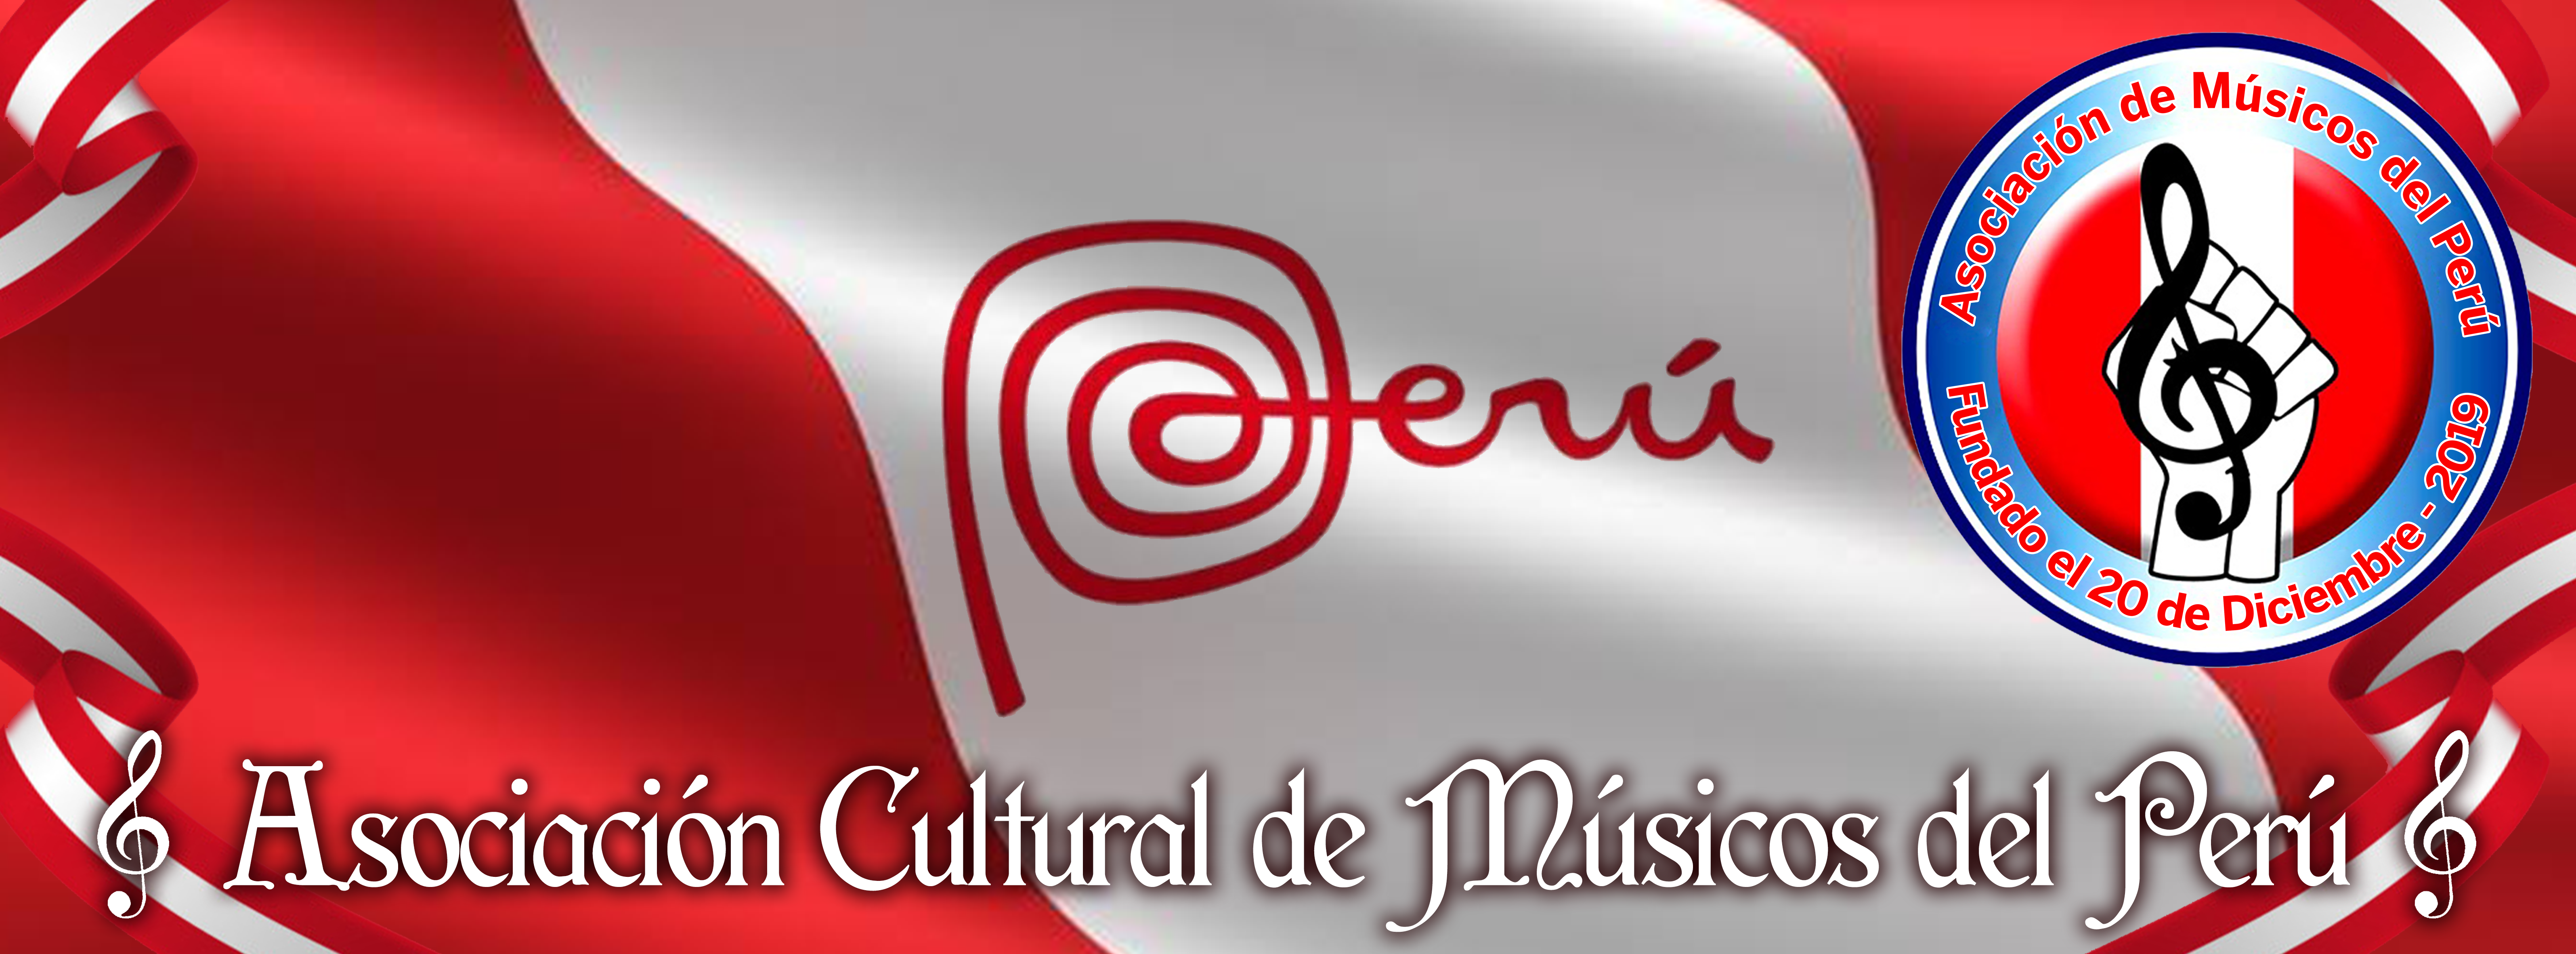 MUSICOS DEL PERU 